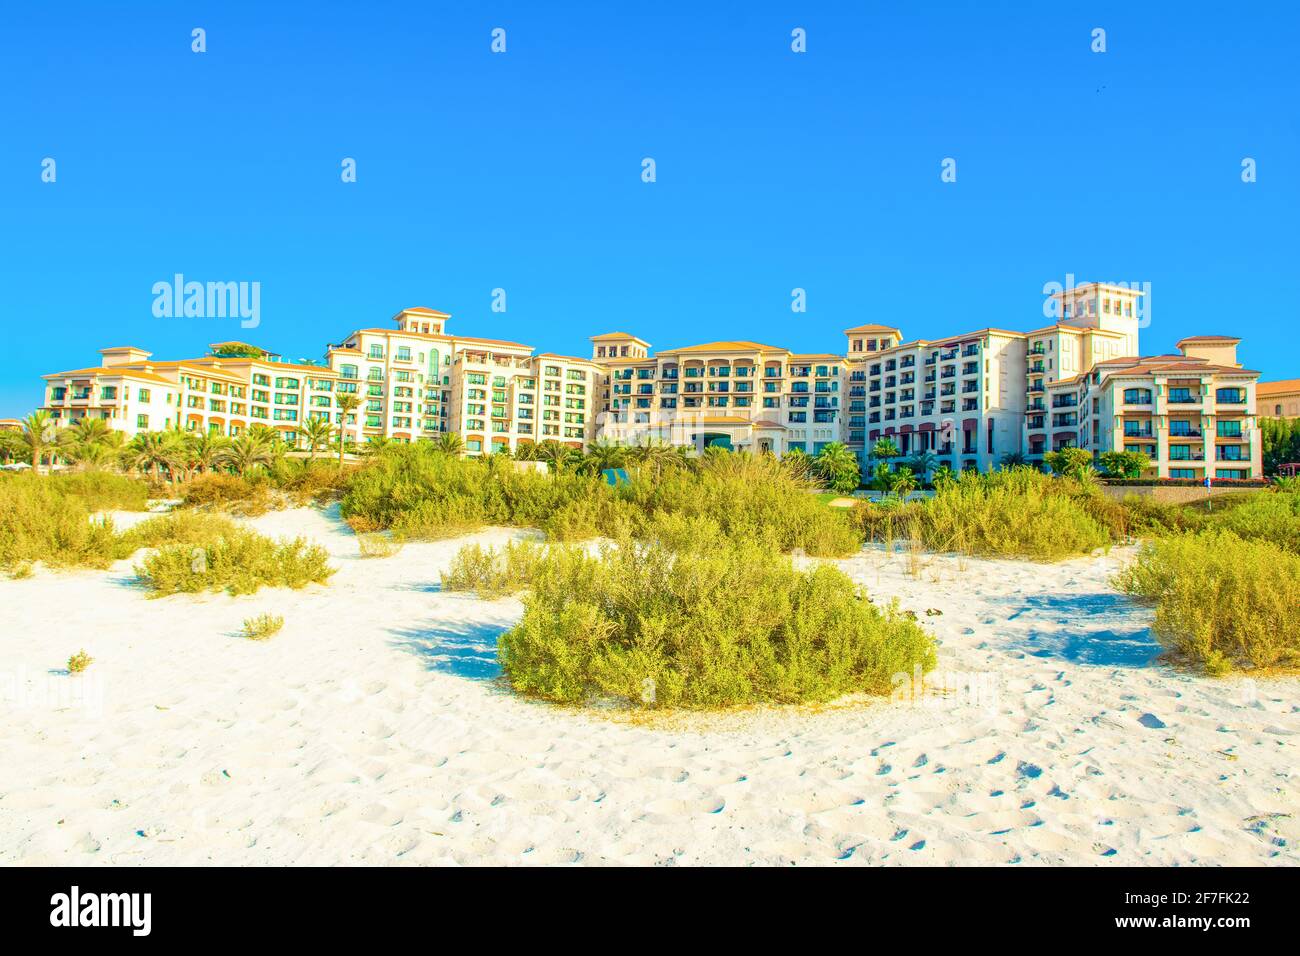 Adu Dhabi, UAE - 27 March 2018: View from the sandy beach to the main building of the luxury hotel - St. Regis Saadiyat Island Resort Stock Photo